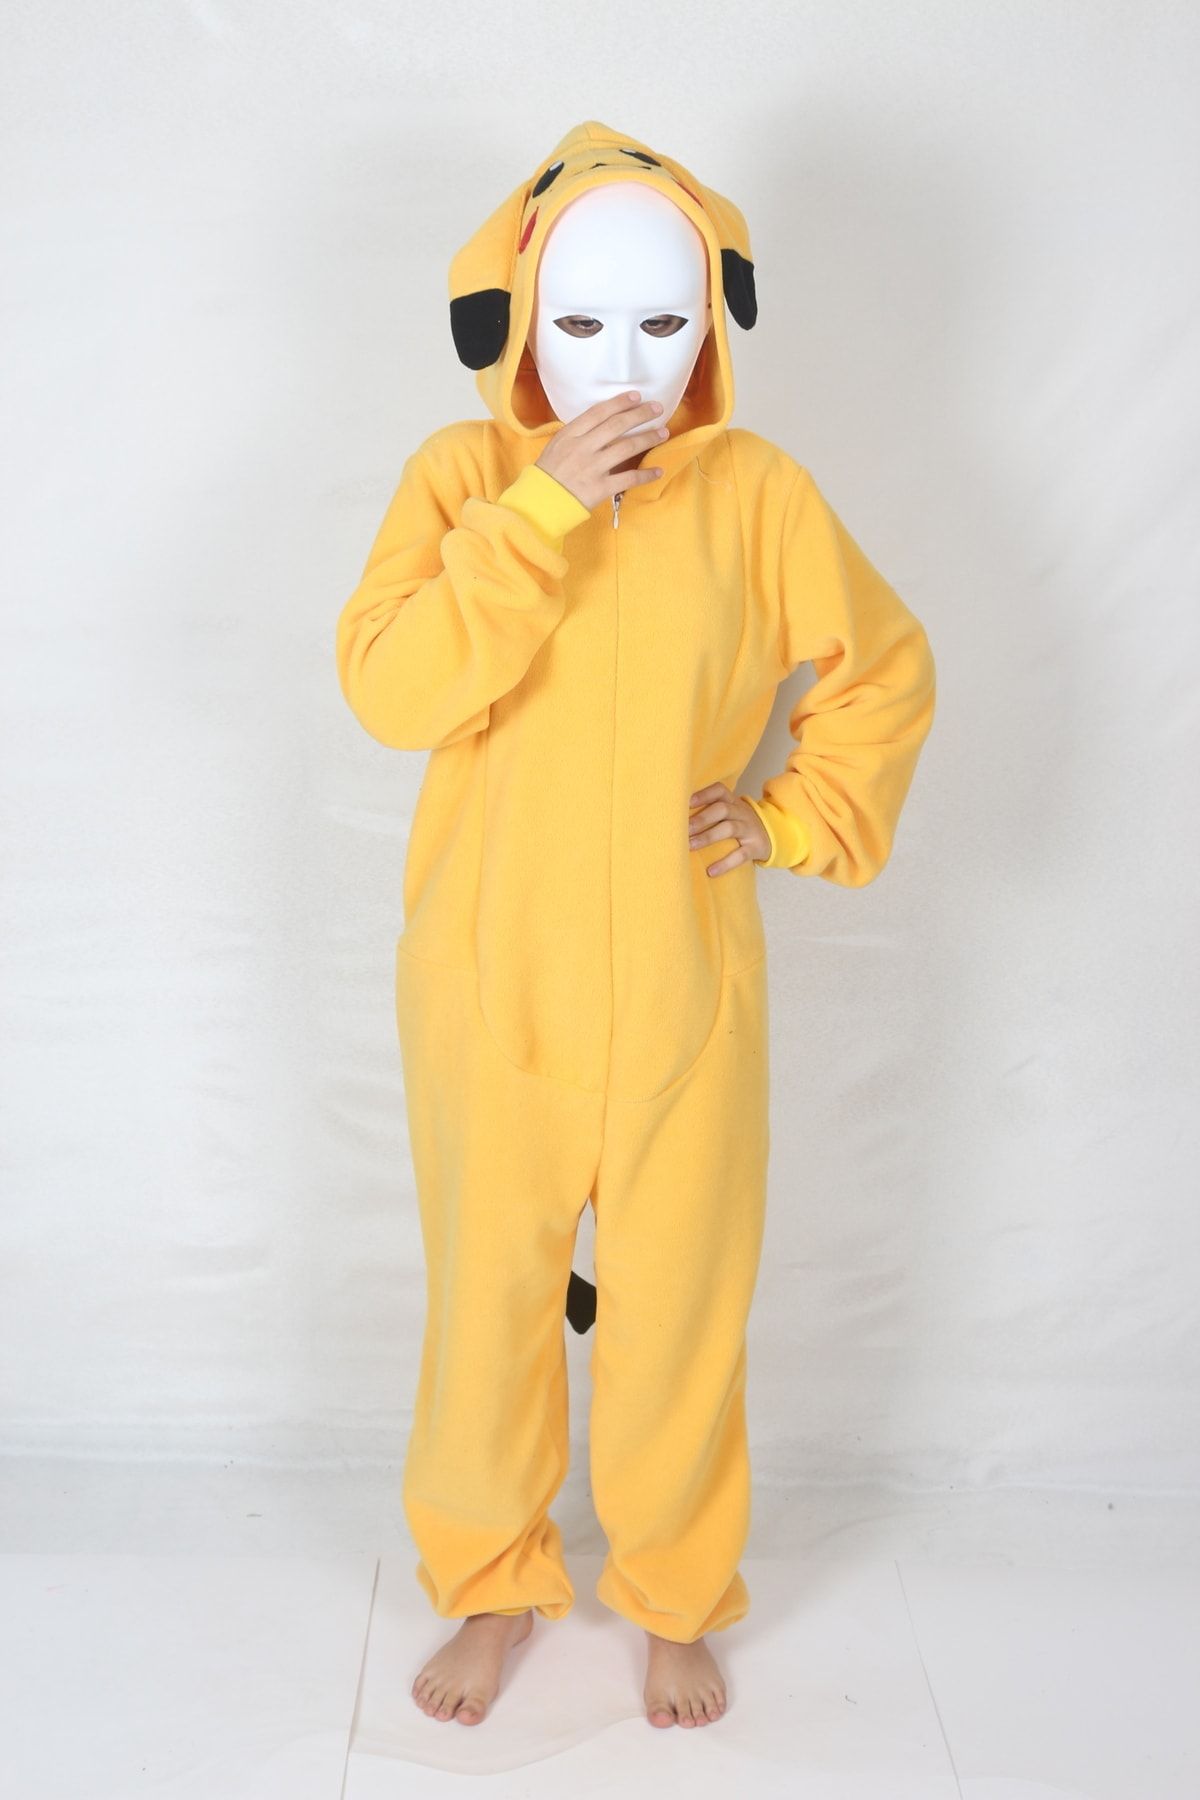 YÜSÜ Yetişkin Pikachu Kostümü Rahat Pijama Kostümü